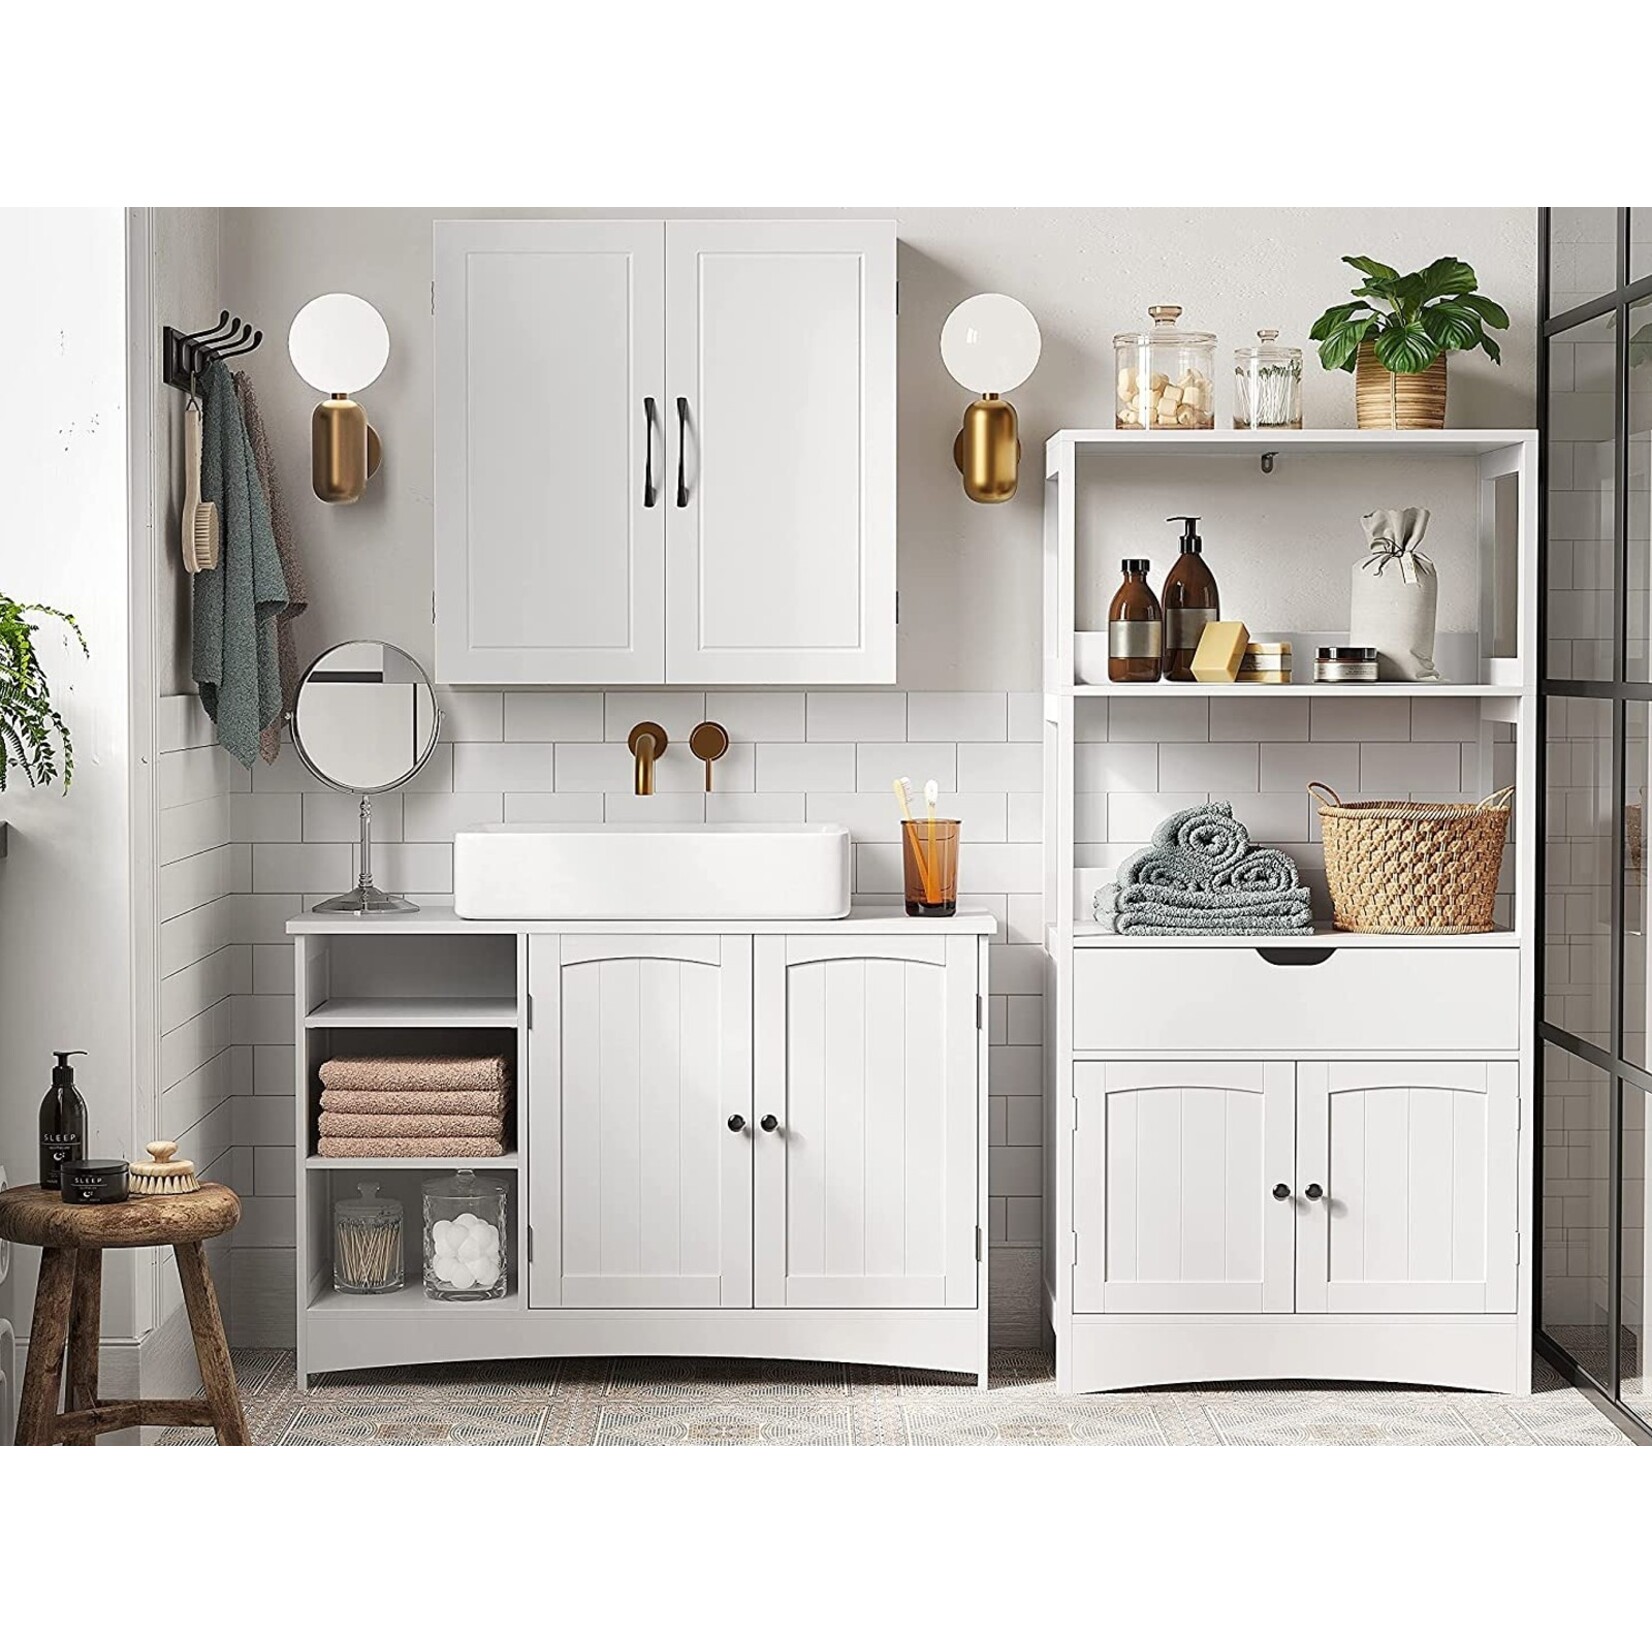 Parya Home Parya Home - Basin cabinet - Cabinet - 2 Doors - 2 Shelves - Wood - White